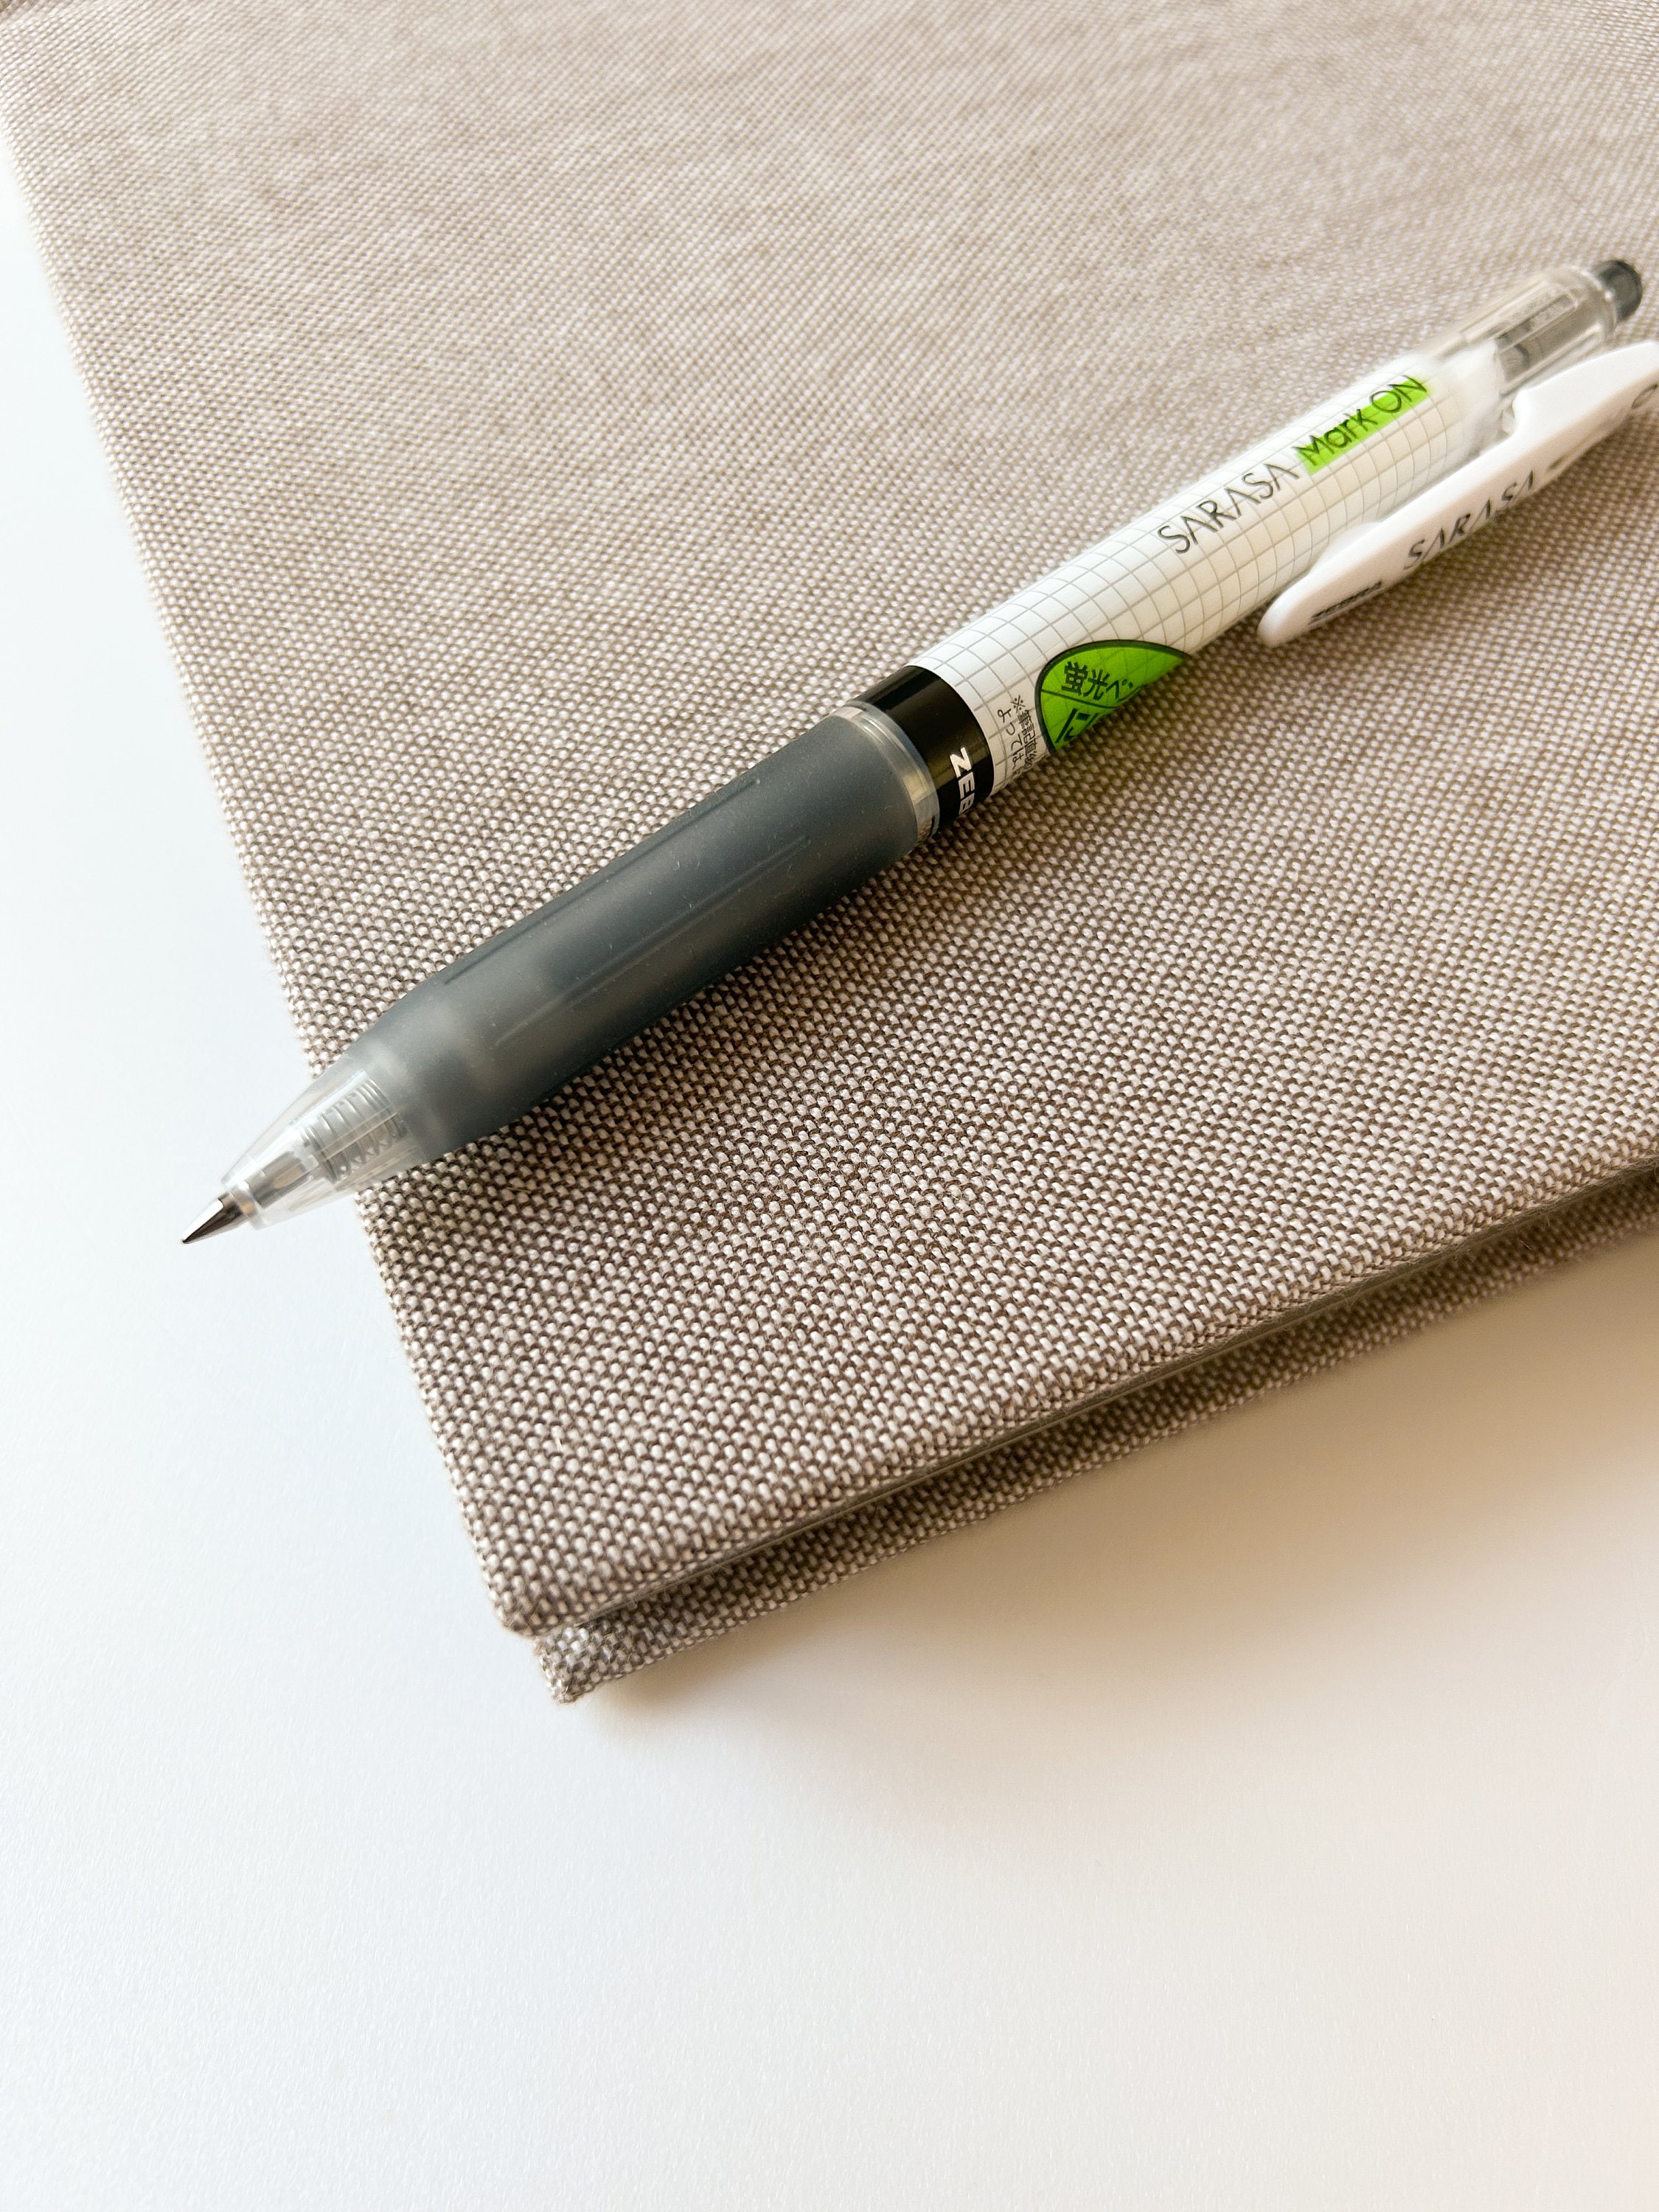 Pensan Glitter Gel Pens 10Color Retractable Glitter Gel Pen Set 1.0mm  Colored Pens for Journaling Coloring Drawing Office School - AliExpress